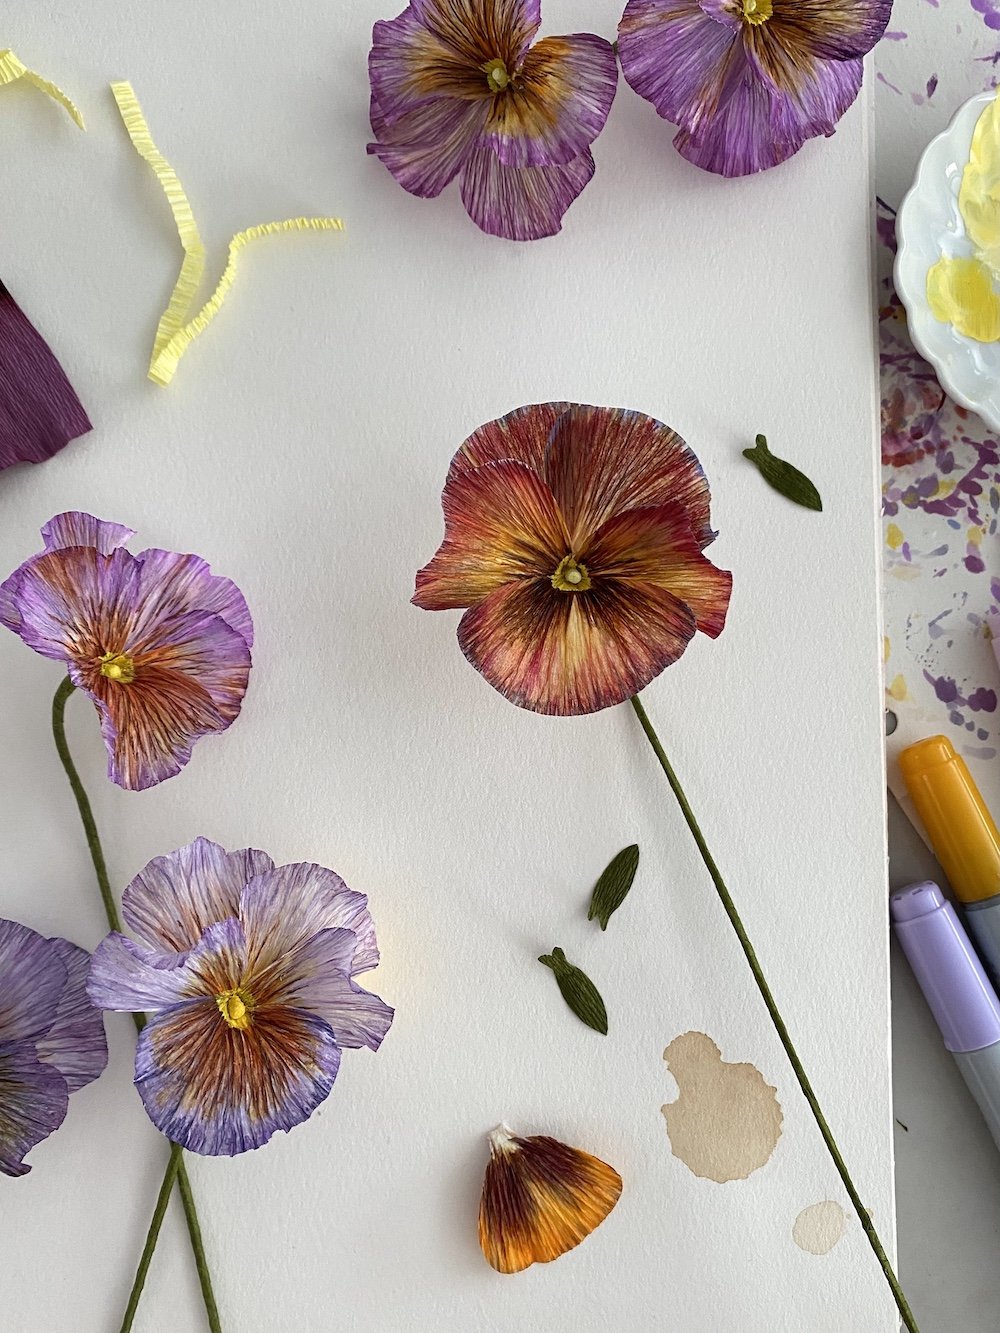 Pen + Paper Flowers: FOUND